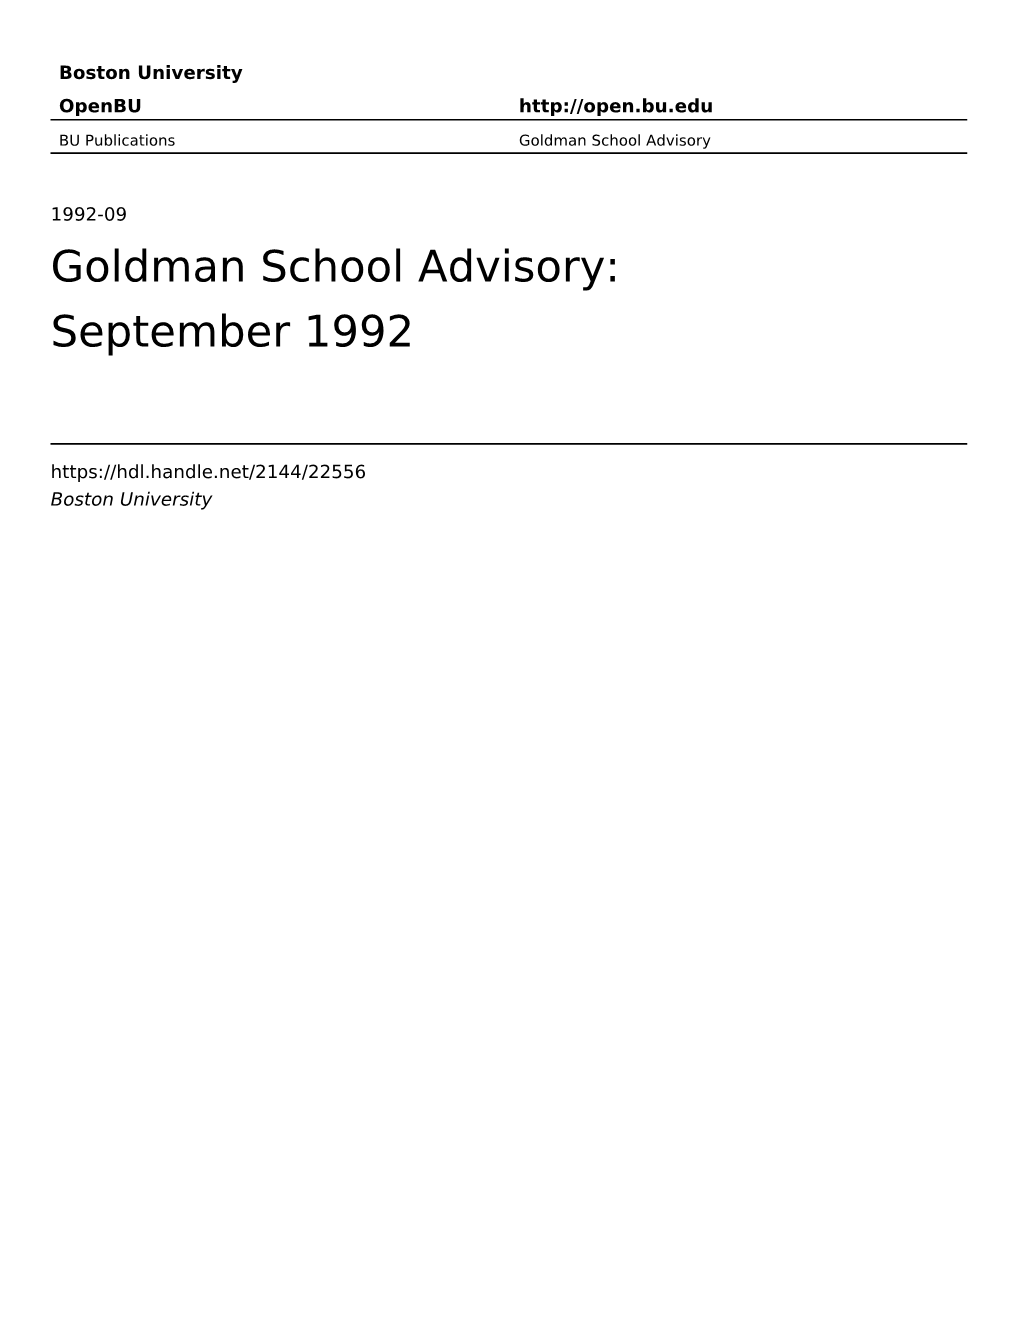 Goldman School Advisory